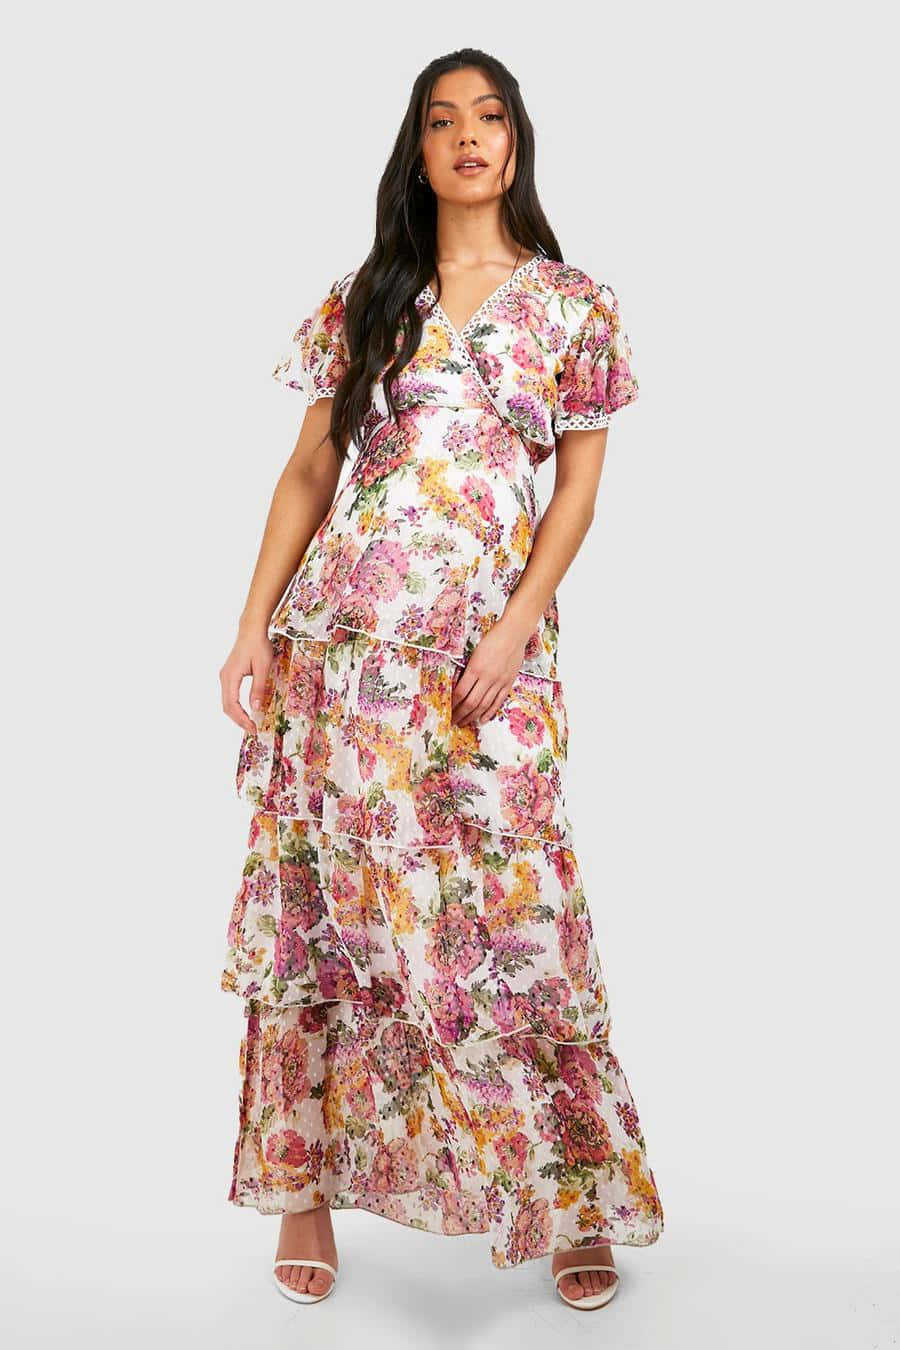 A Woman Wearing A Floral Print Maxi Dress